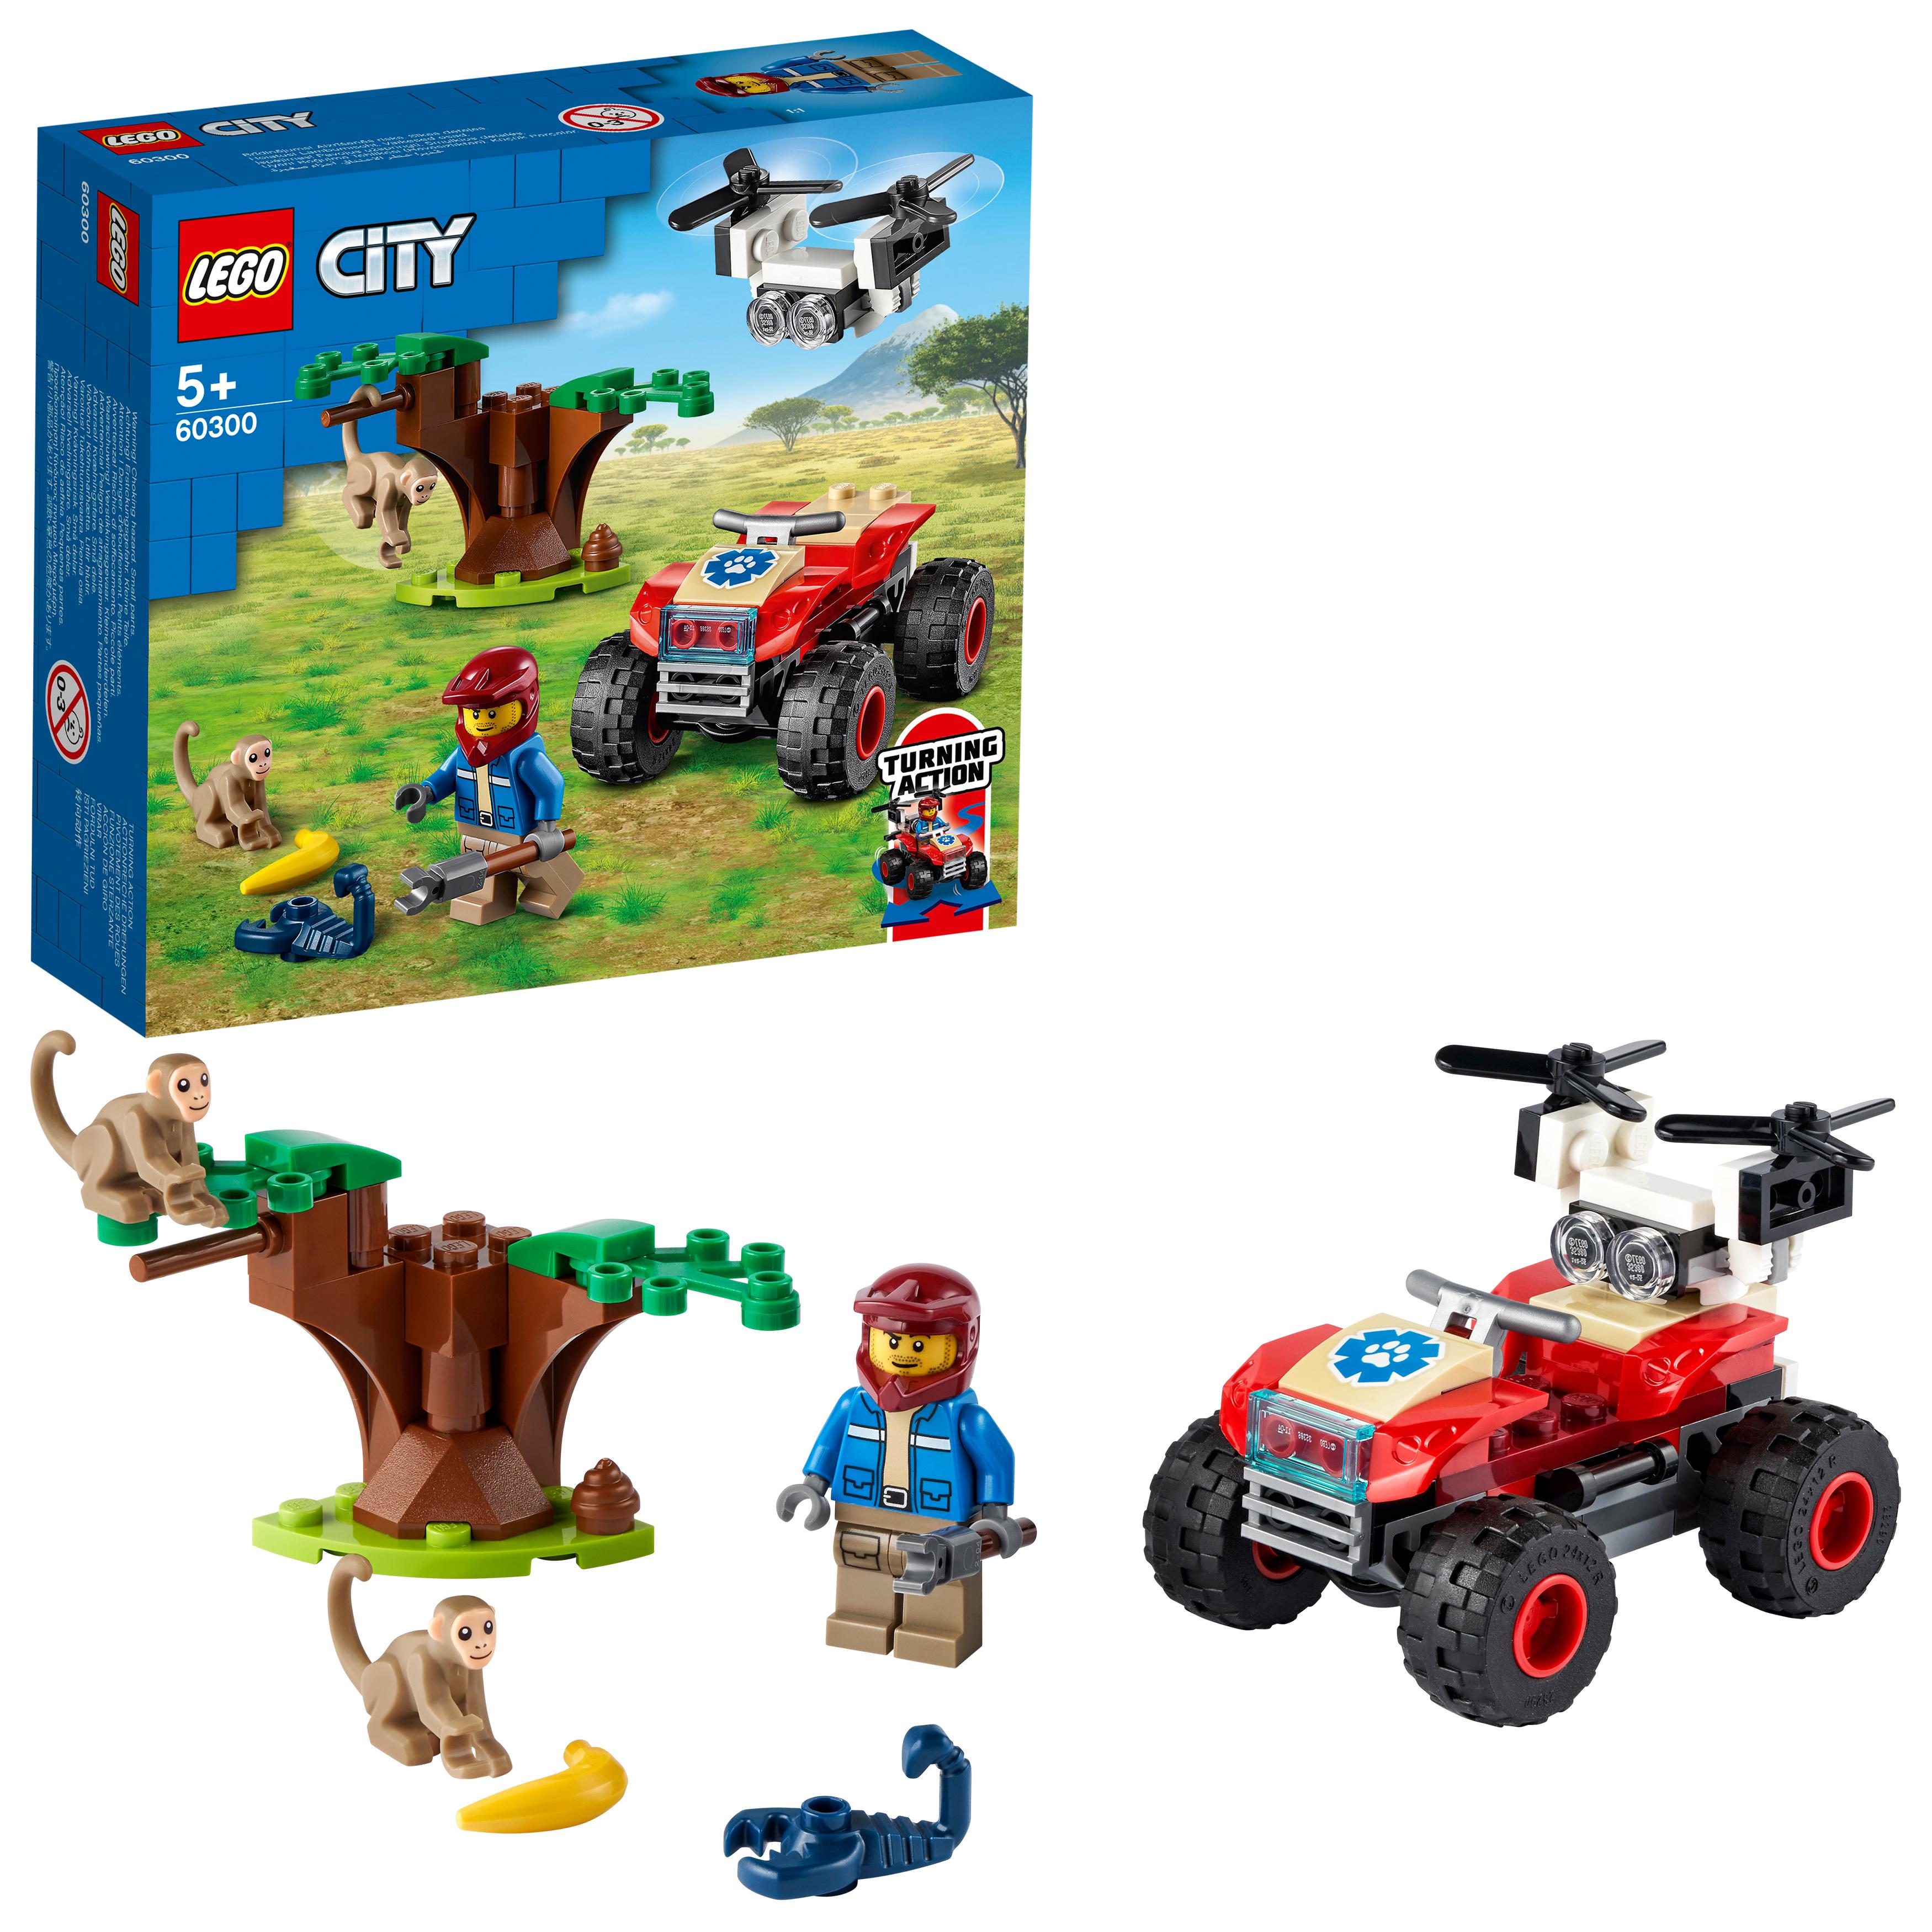 Tierrettungs-Quad 60300 Wildlife LEGO City